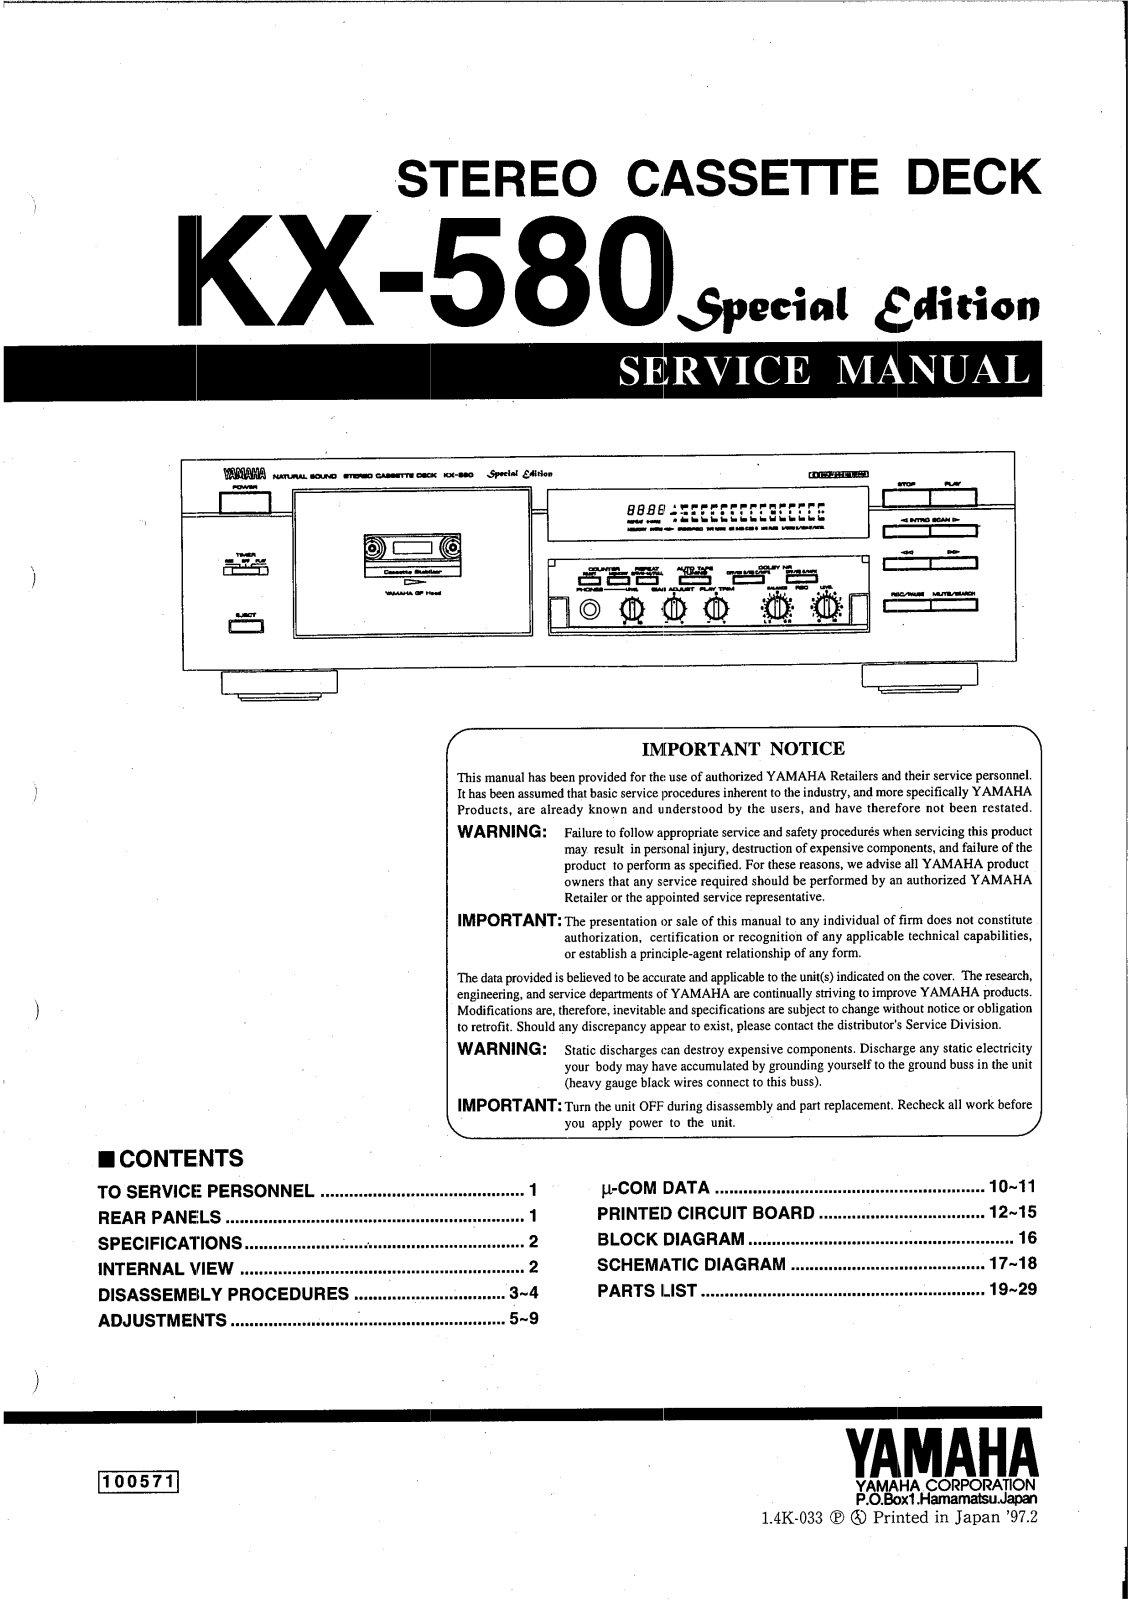 Yamaha KX-580 Service Manual